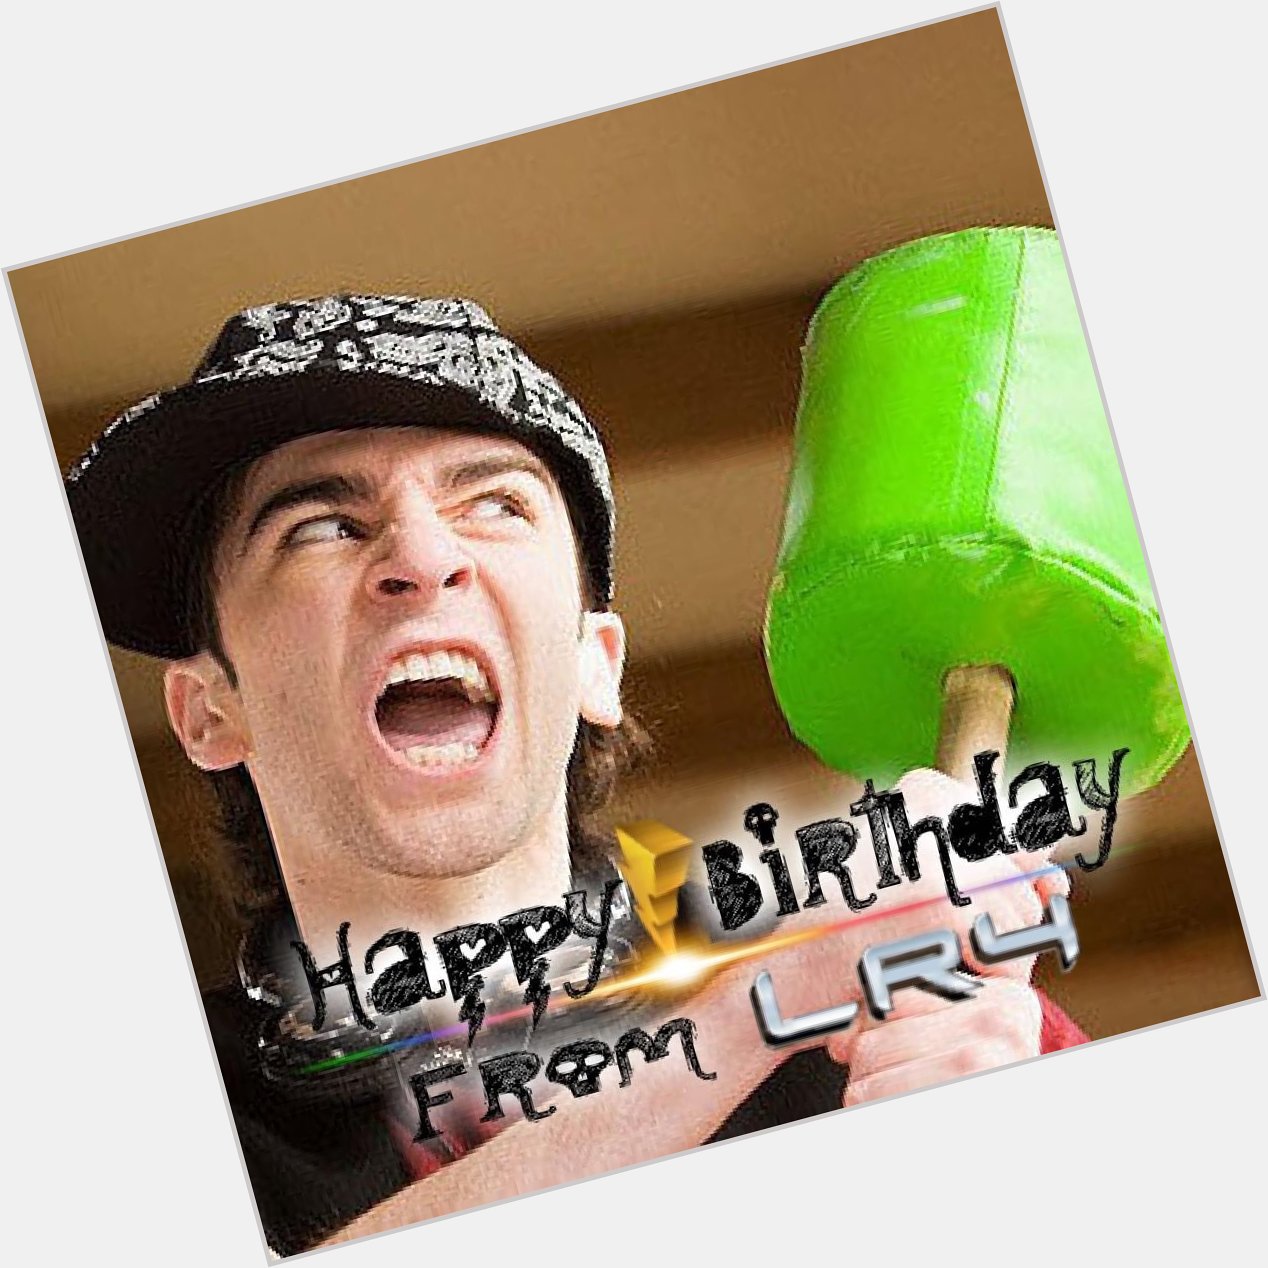 LR4 would like to wish Felix Ryan a Happy Birthday! 